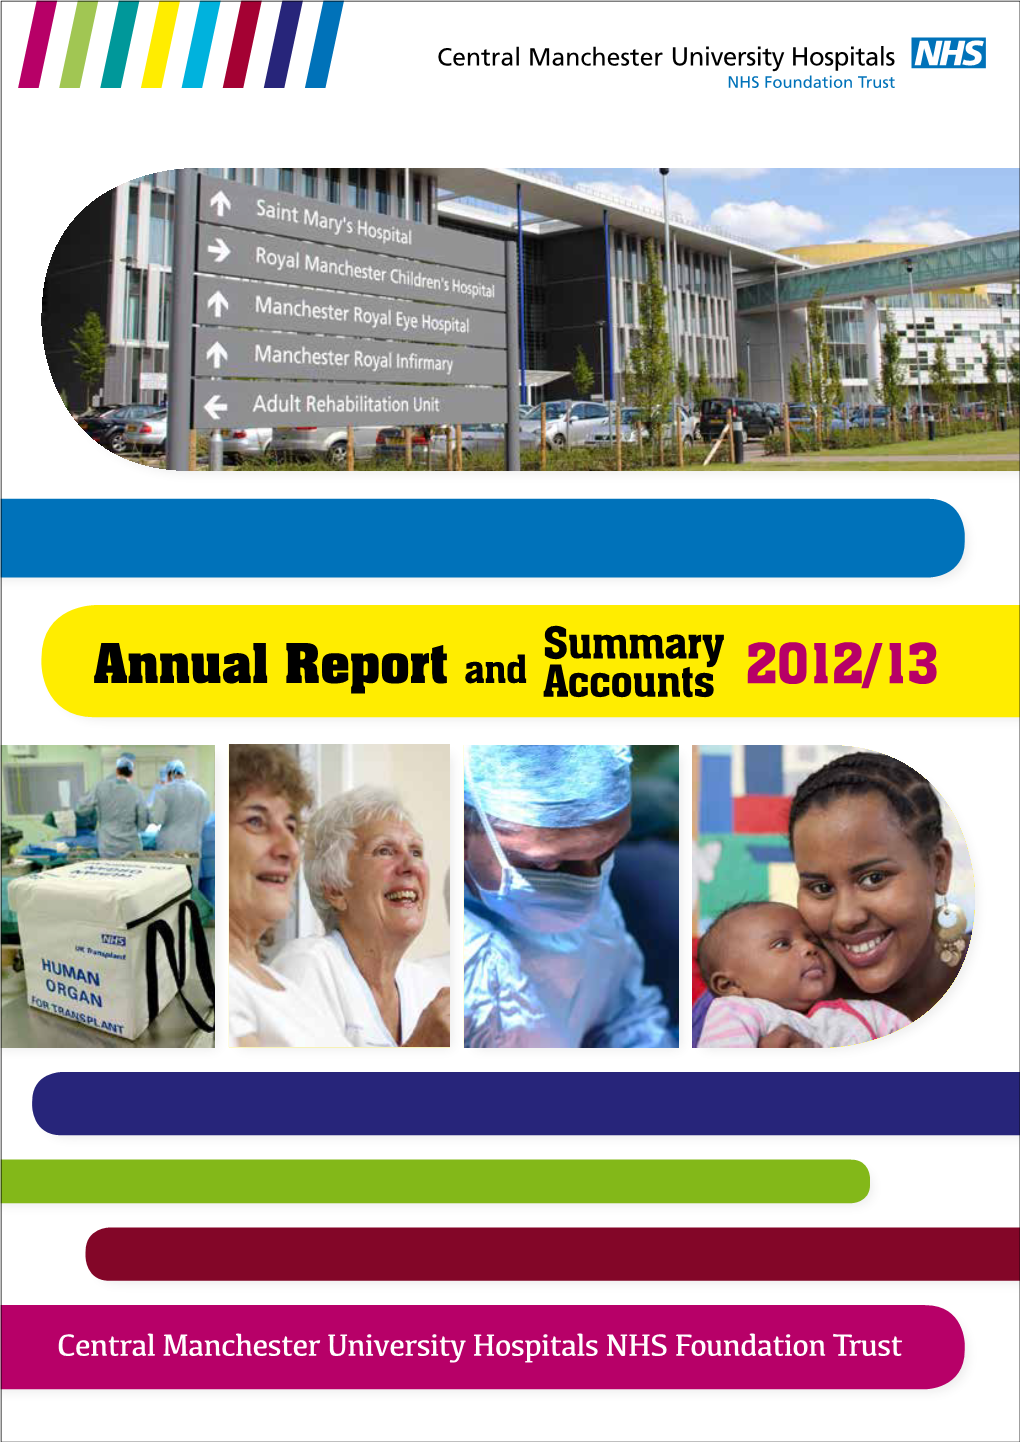 2012/13 Annual Report